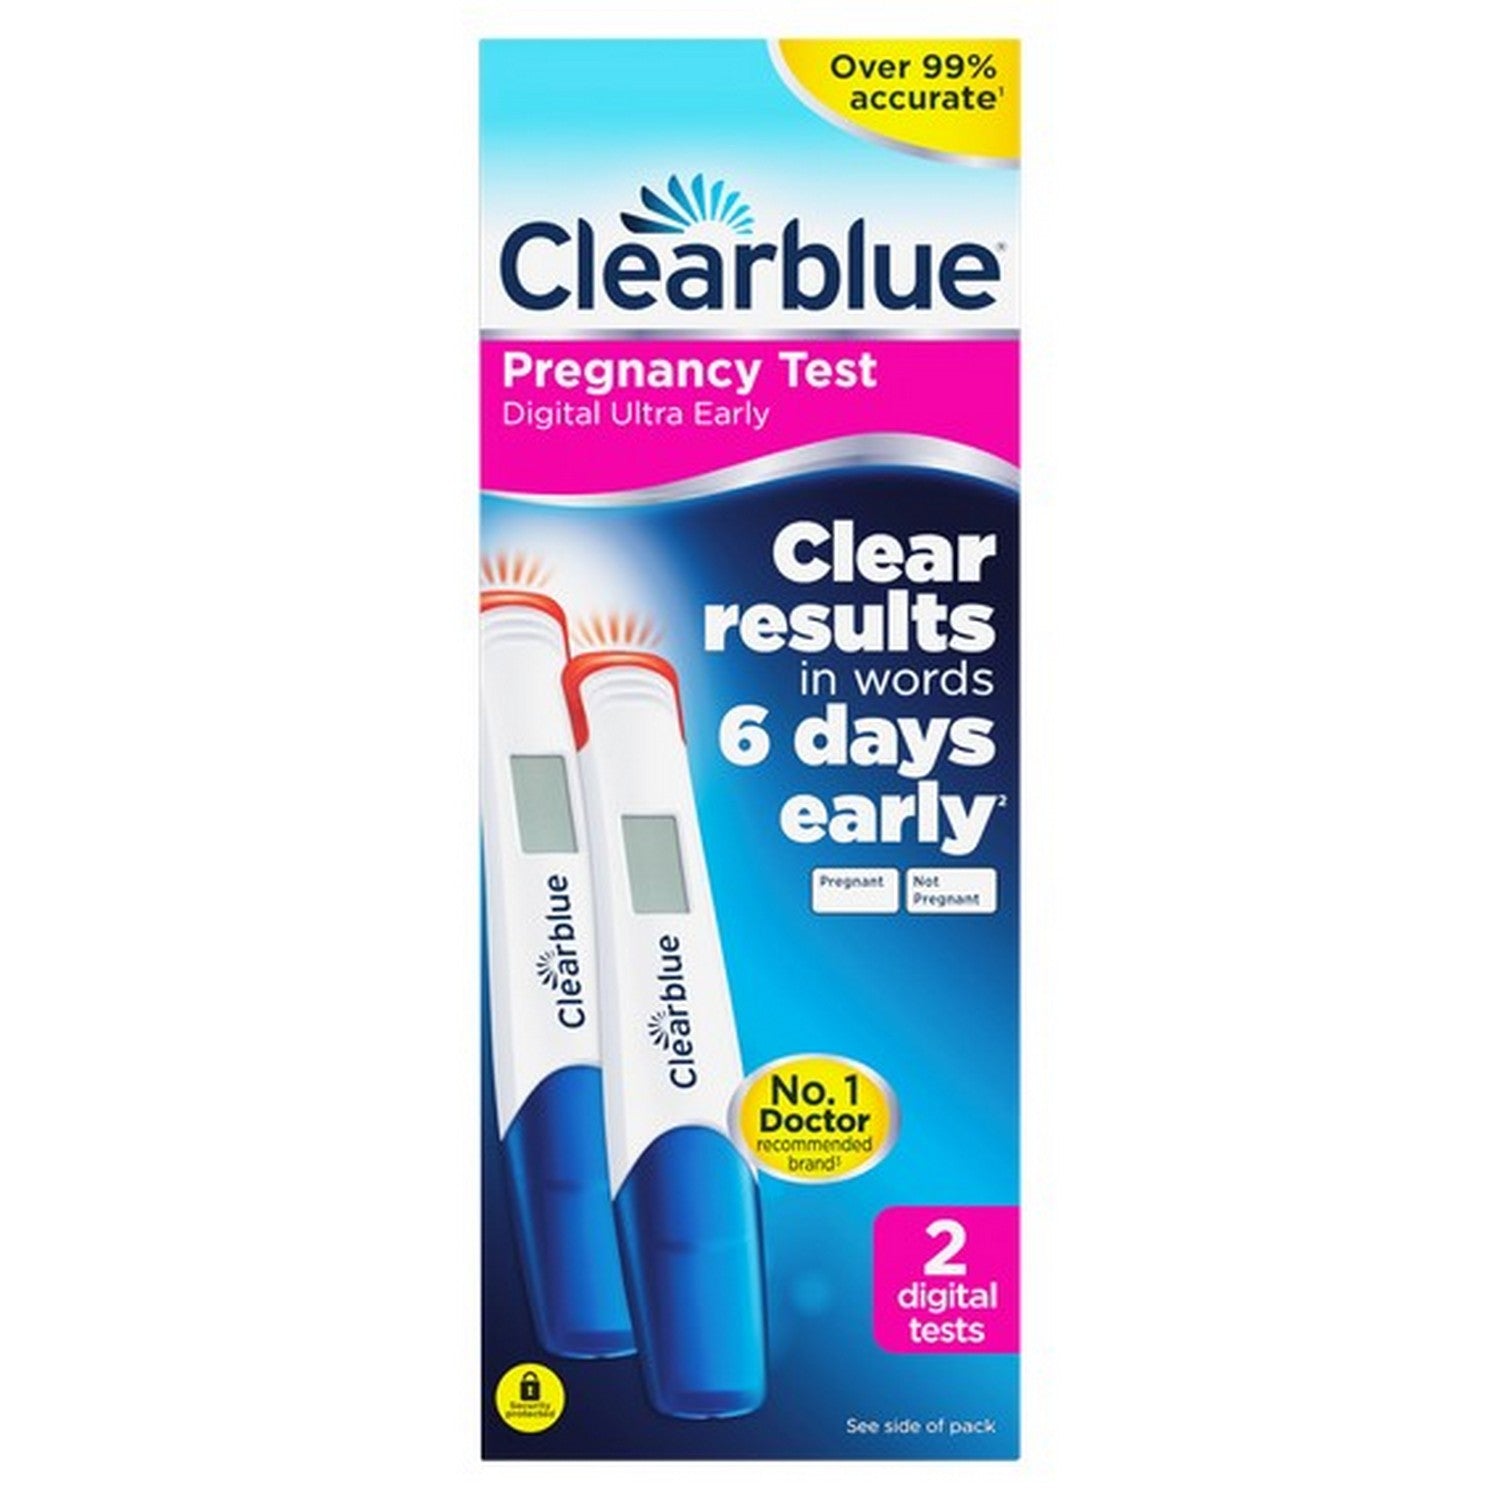 Clearblue Digital Ultra Early Pregnancy Test - 2 Digital Tests